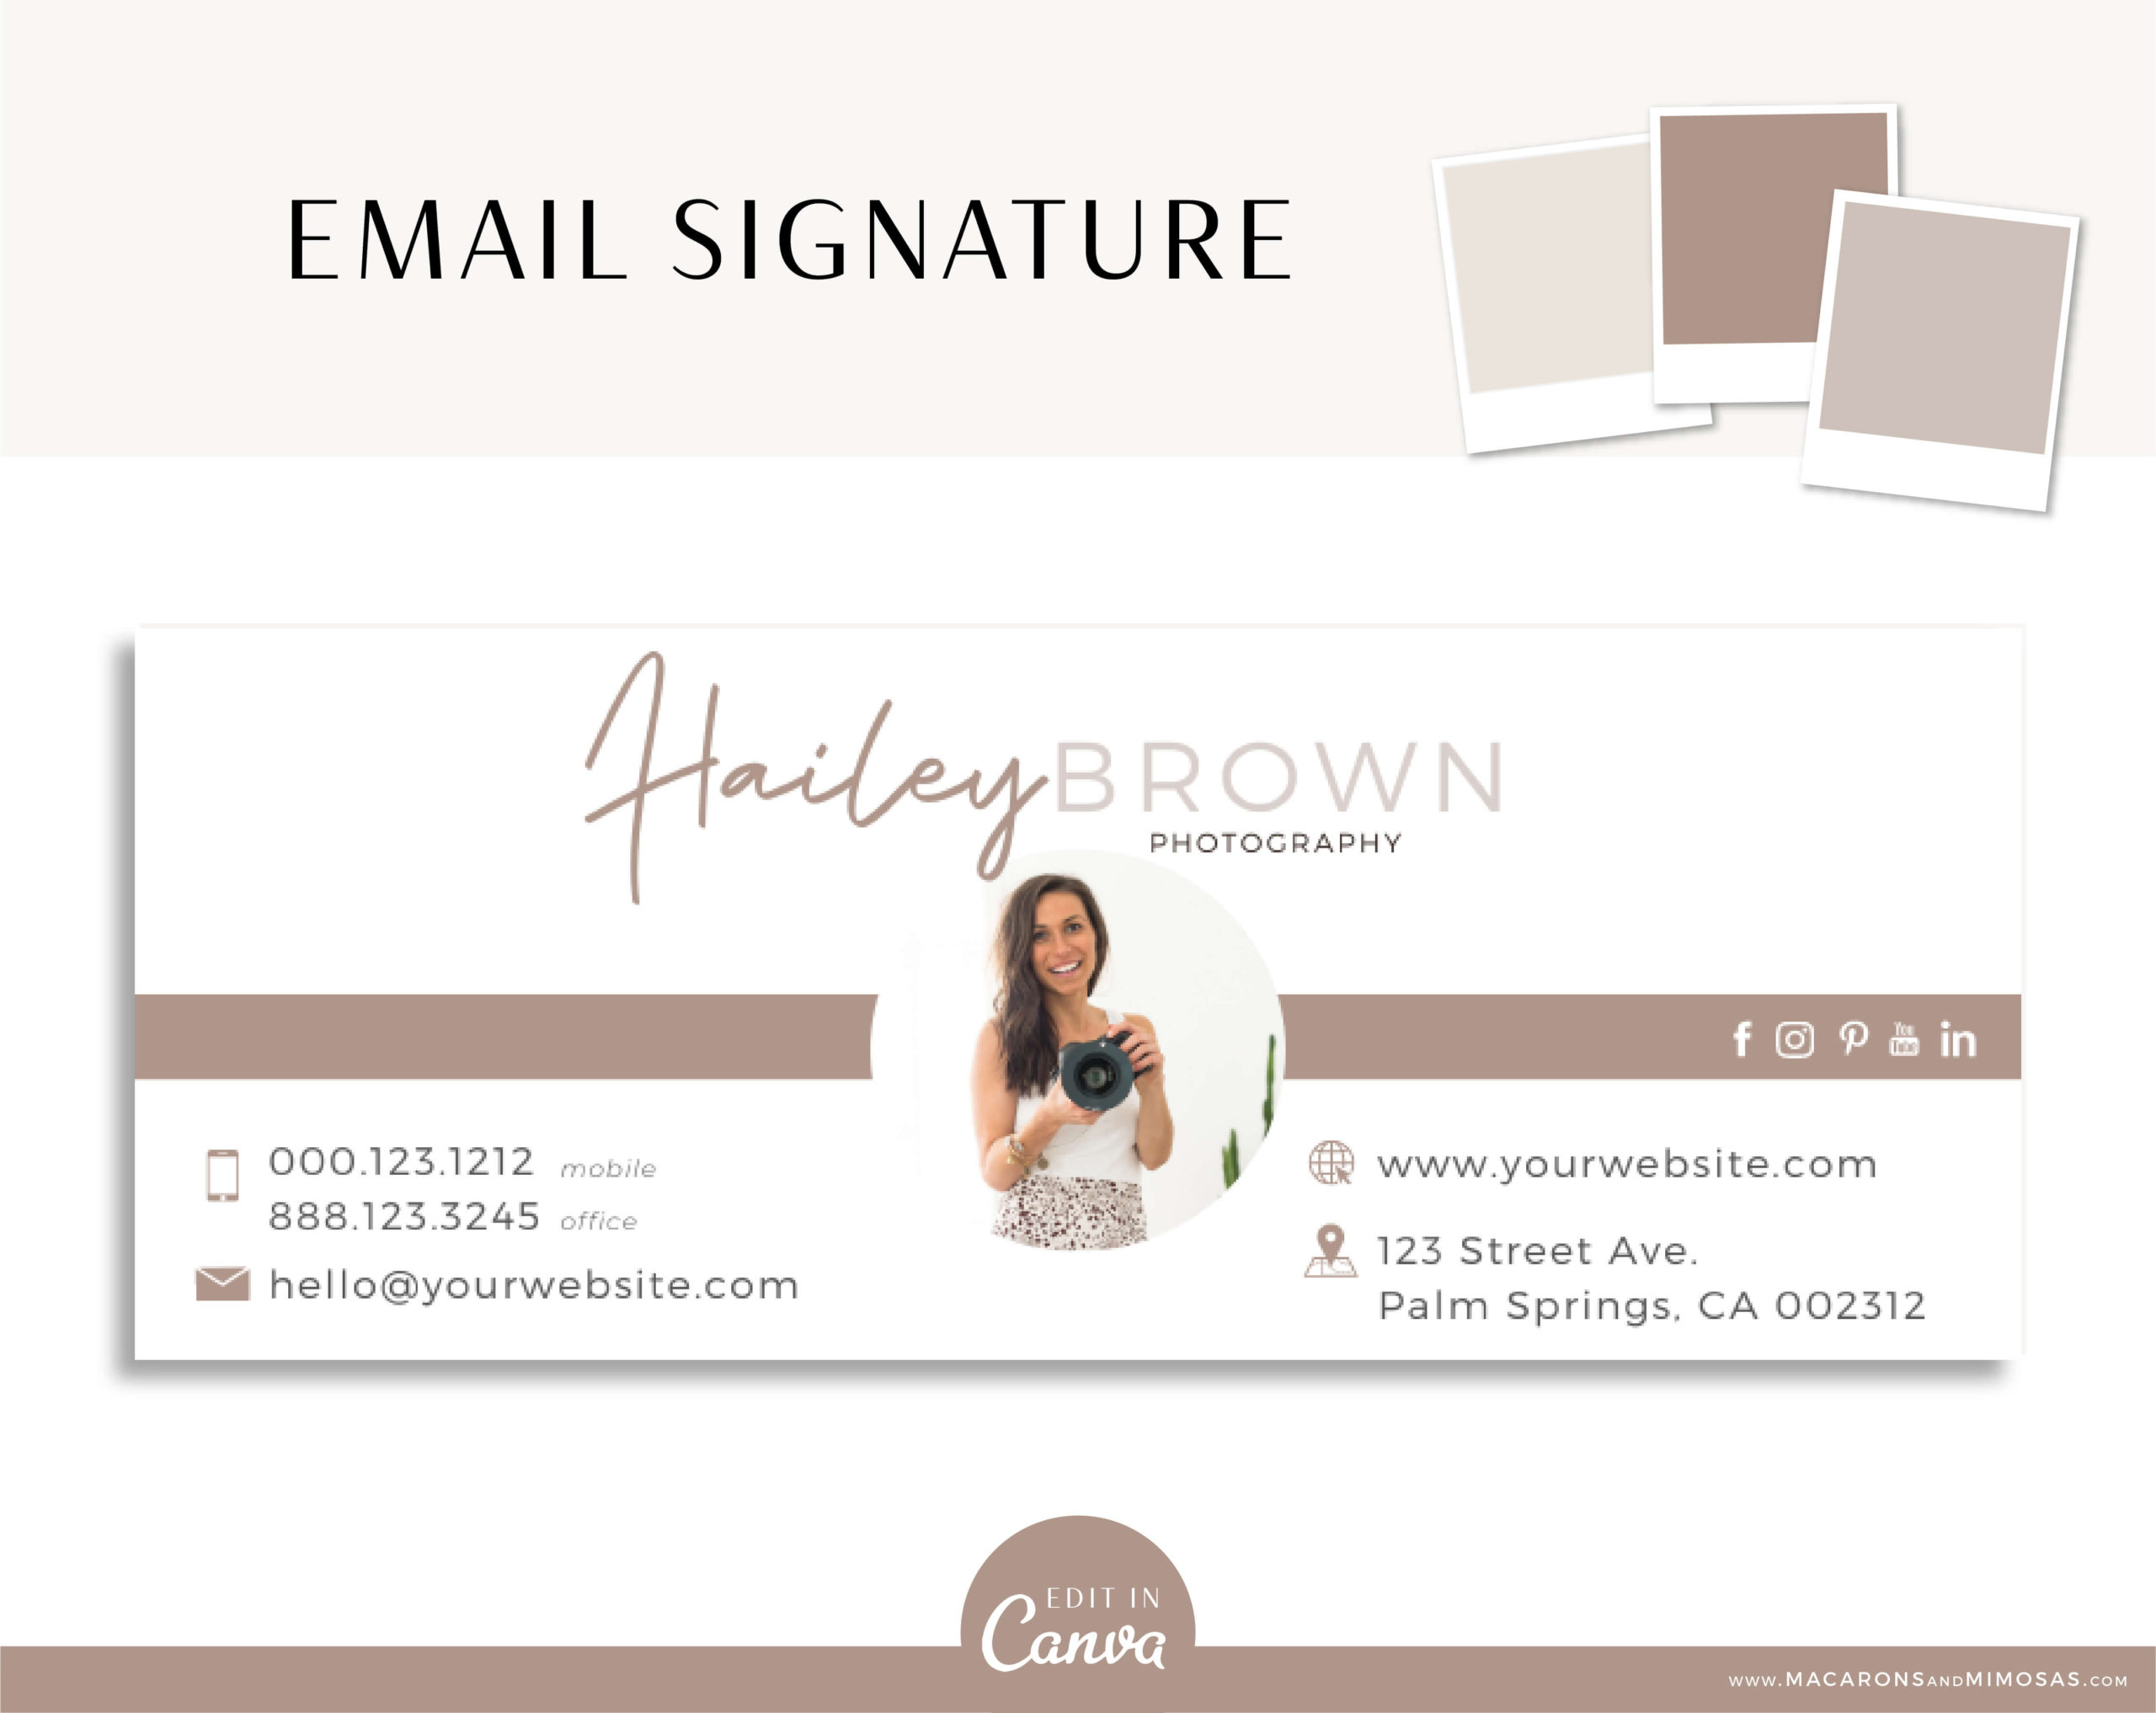 Custom Email Signature Template Logo, Best Seller Photographer Marketing Tool, Professional Real Estate Picture Signature, Realtor Gmail Design